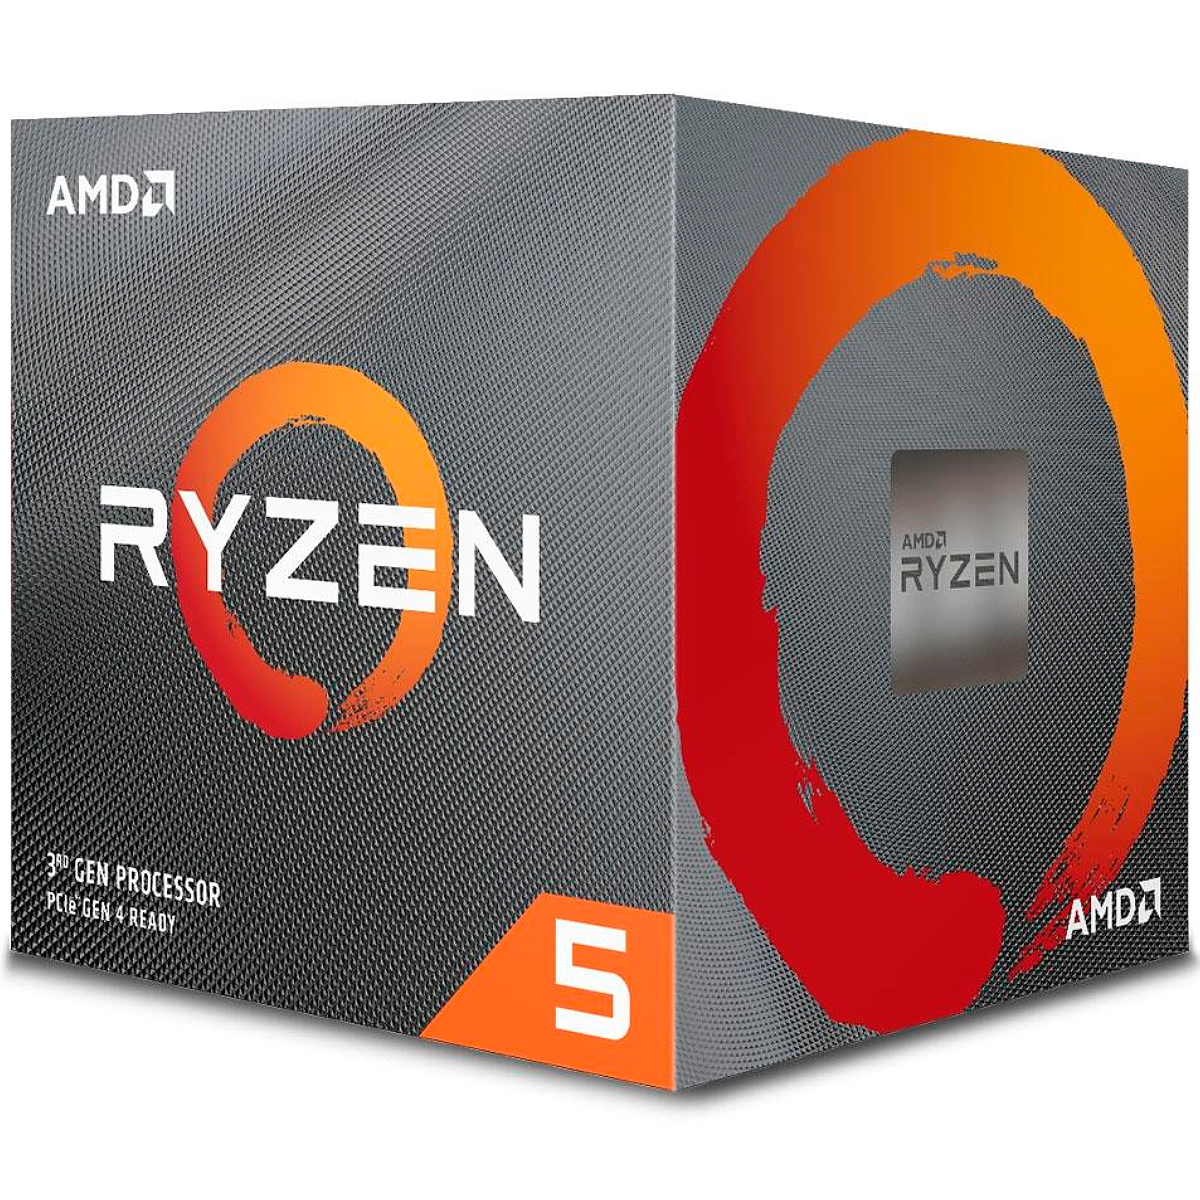 AMD Ryzen 5 3600X Hexa Core - 12 Threads - 3.8GHz (Turbo 4.4GHz) - Cache 32MB - AM4 - TDP 95W - Wraith Spire Cooler - 100-100000022BOX - sem gráfico integrado